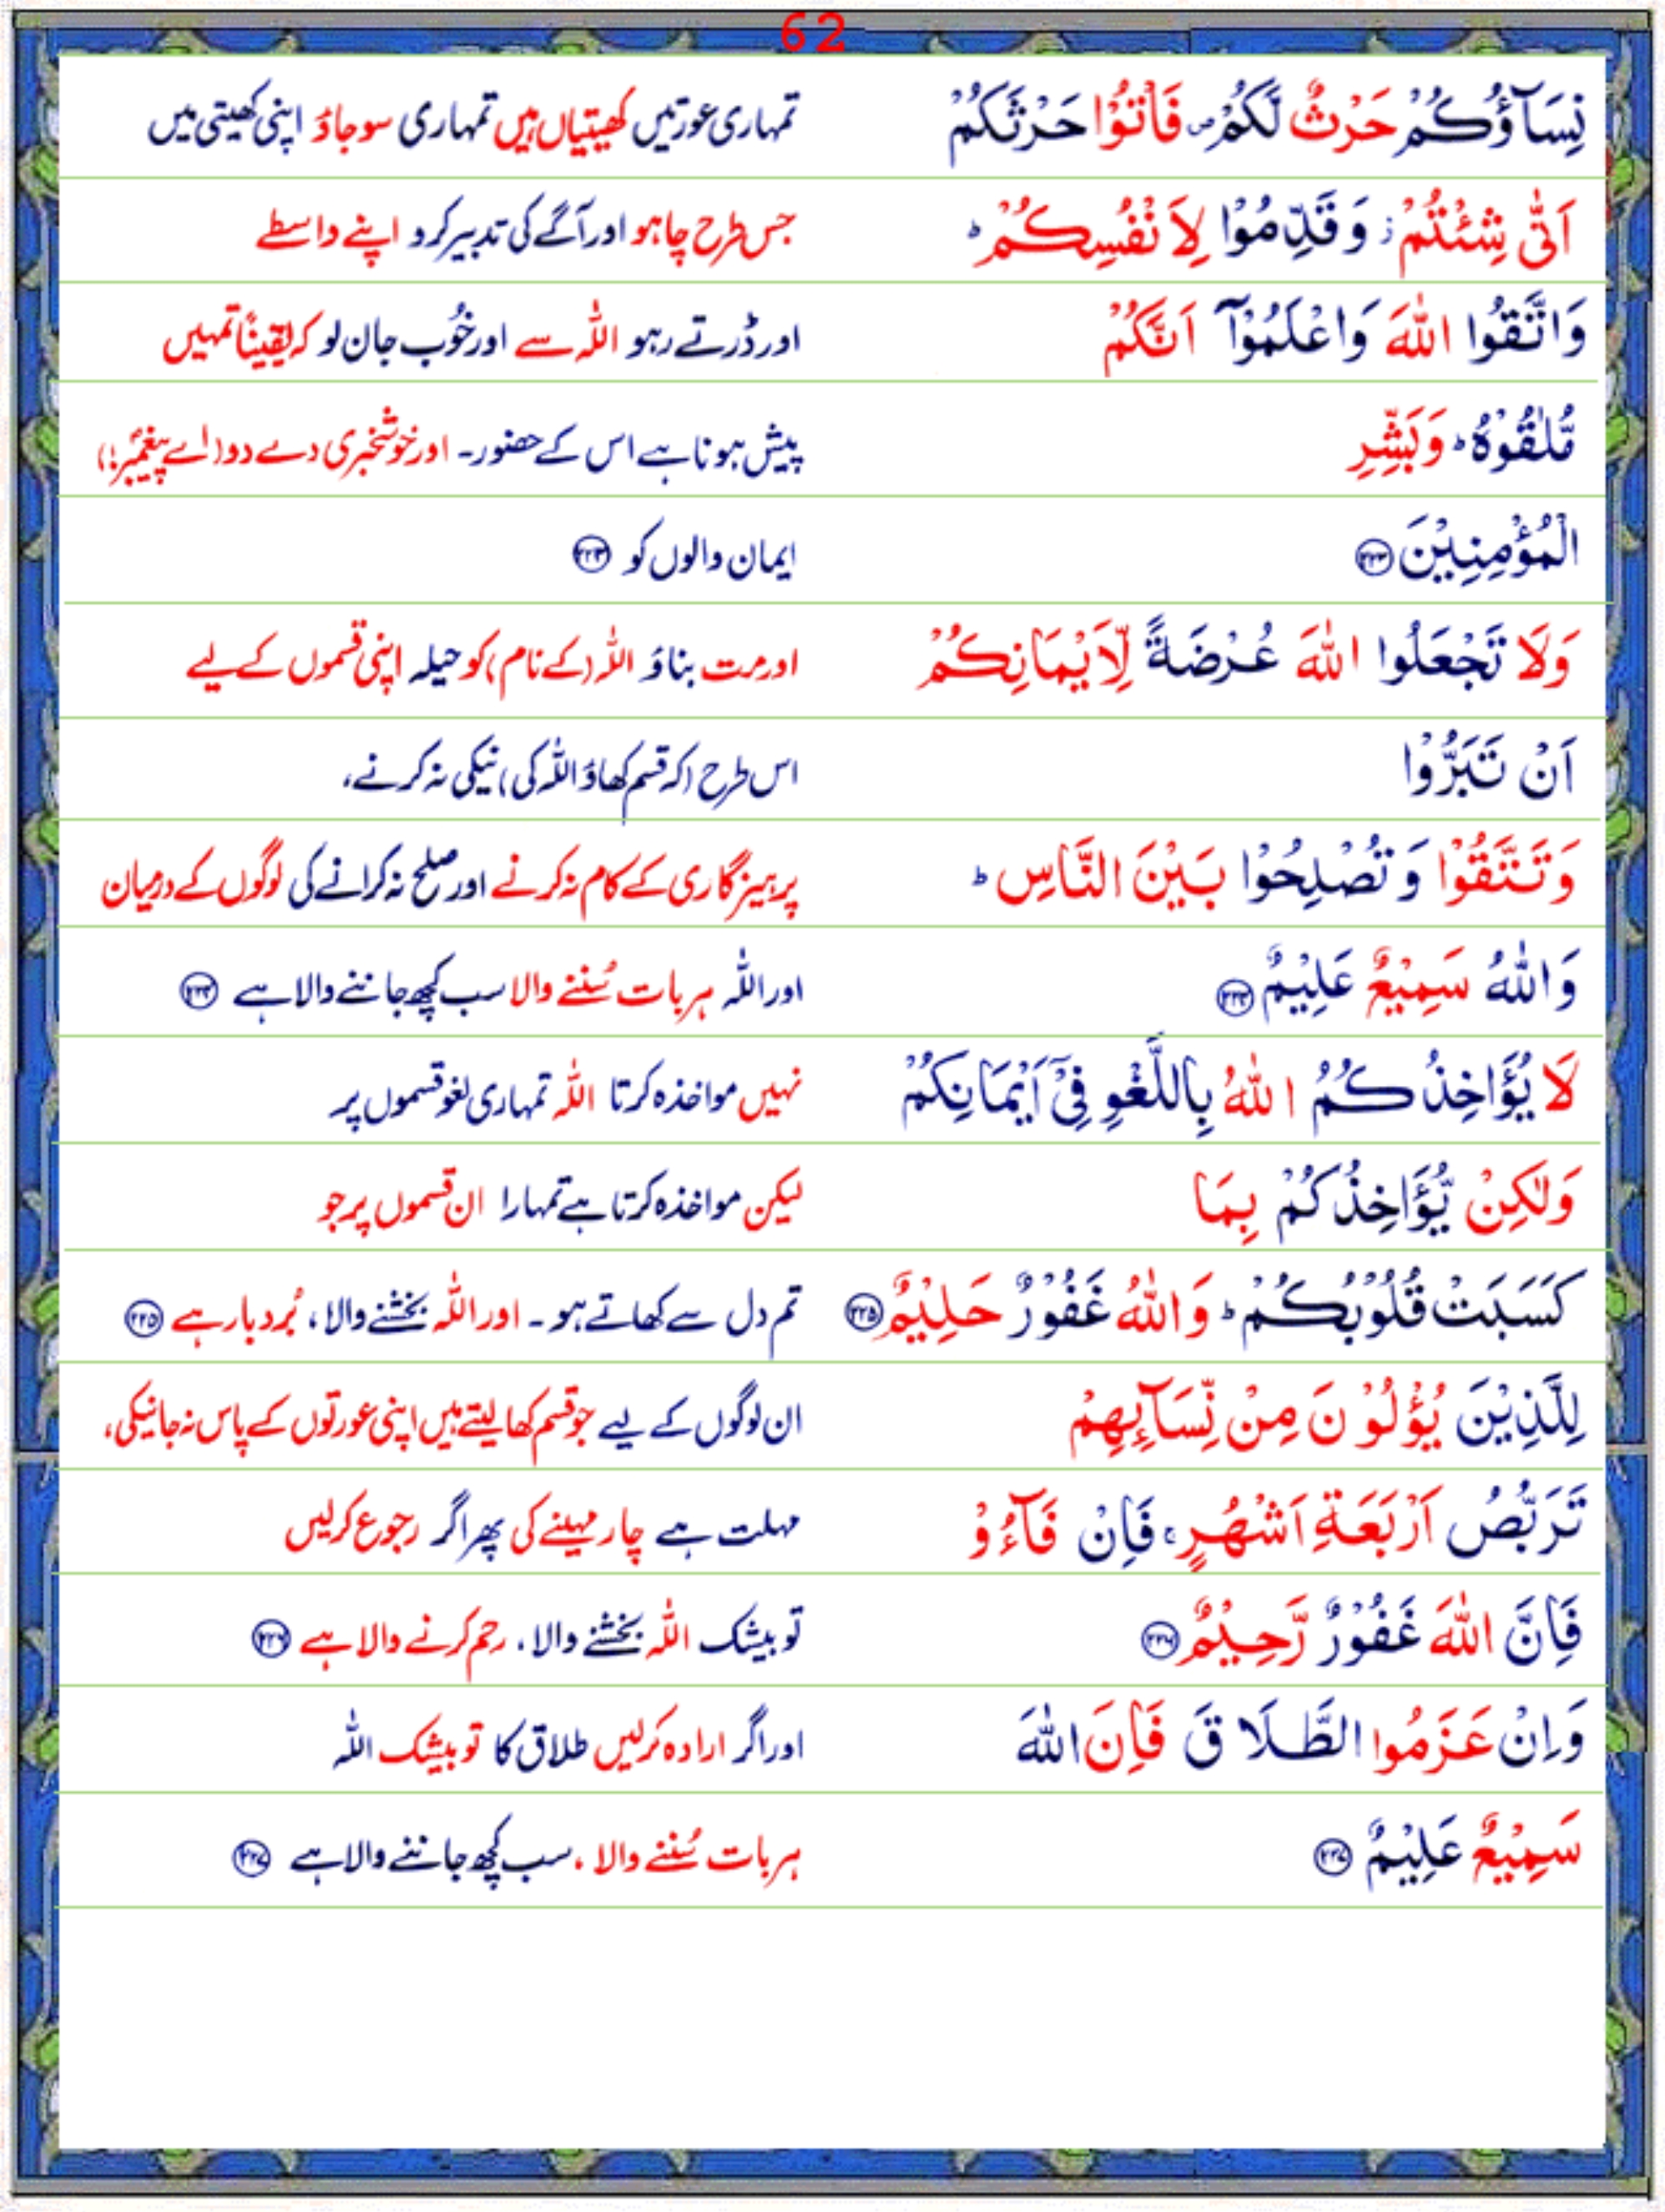 Surah Al Baqarah Urdu1 Page 15 Of 17 Quran O Sunnat